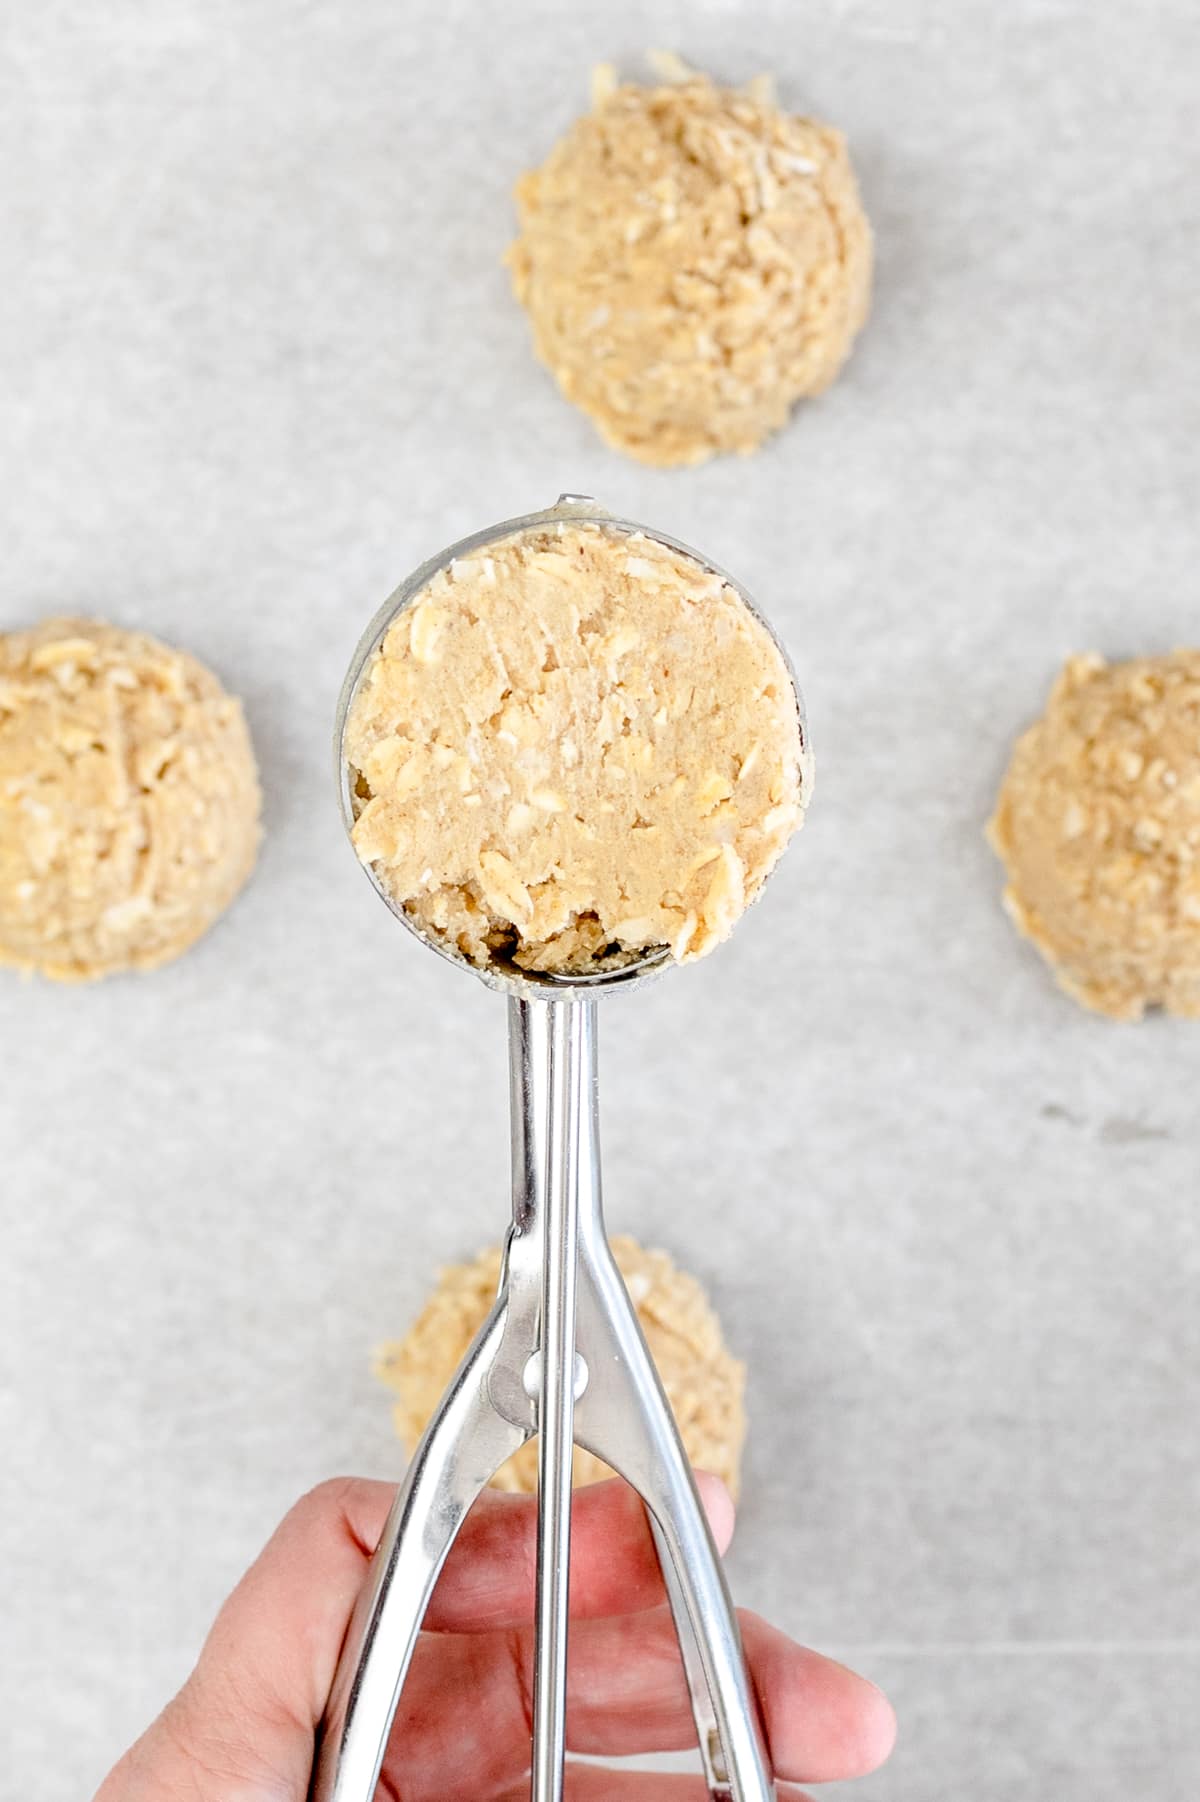 Top view of a cookie scoop being held in mid-air, full of oaty cookie dough. 